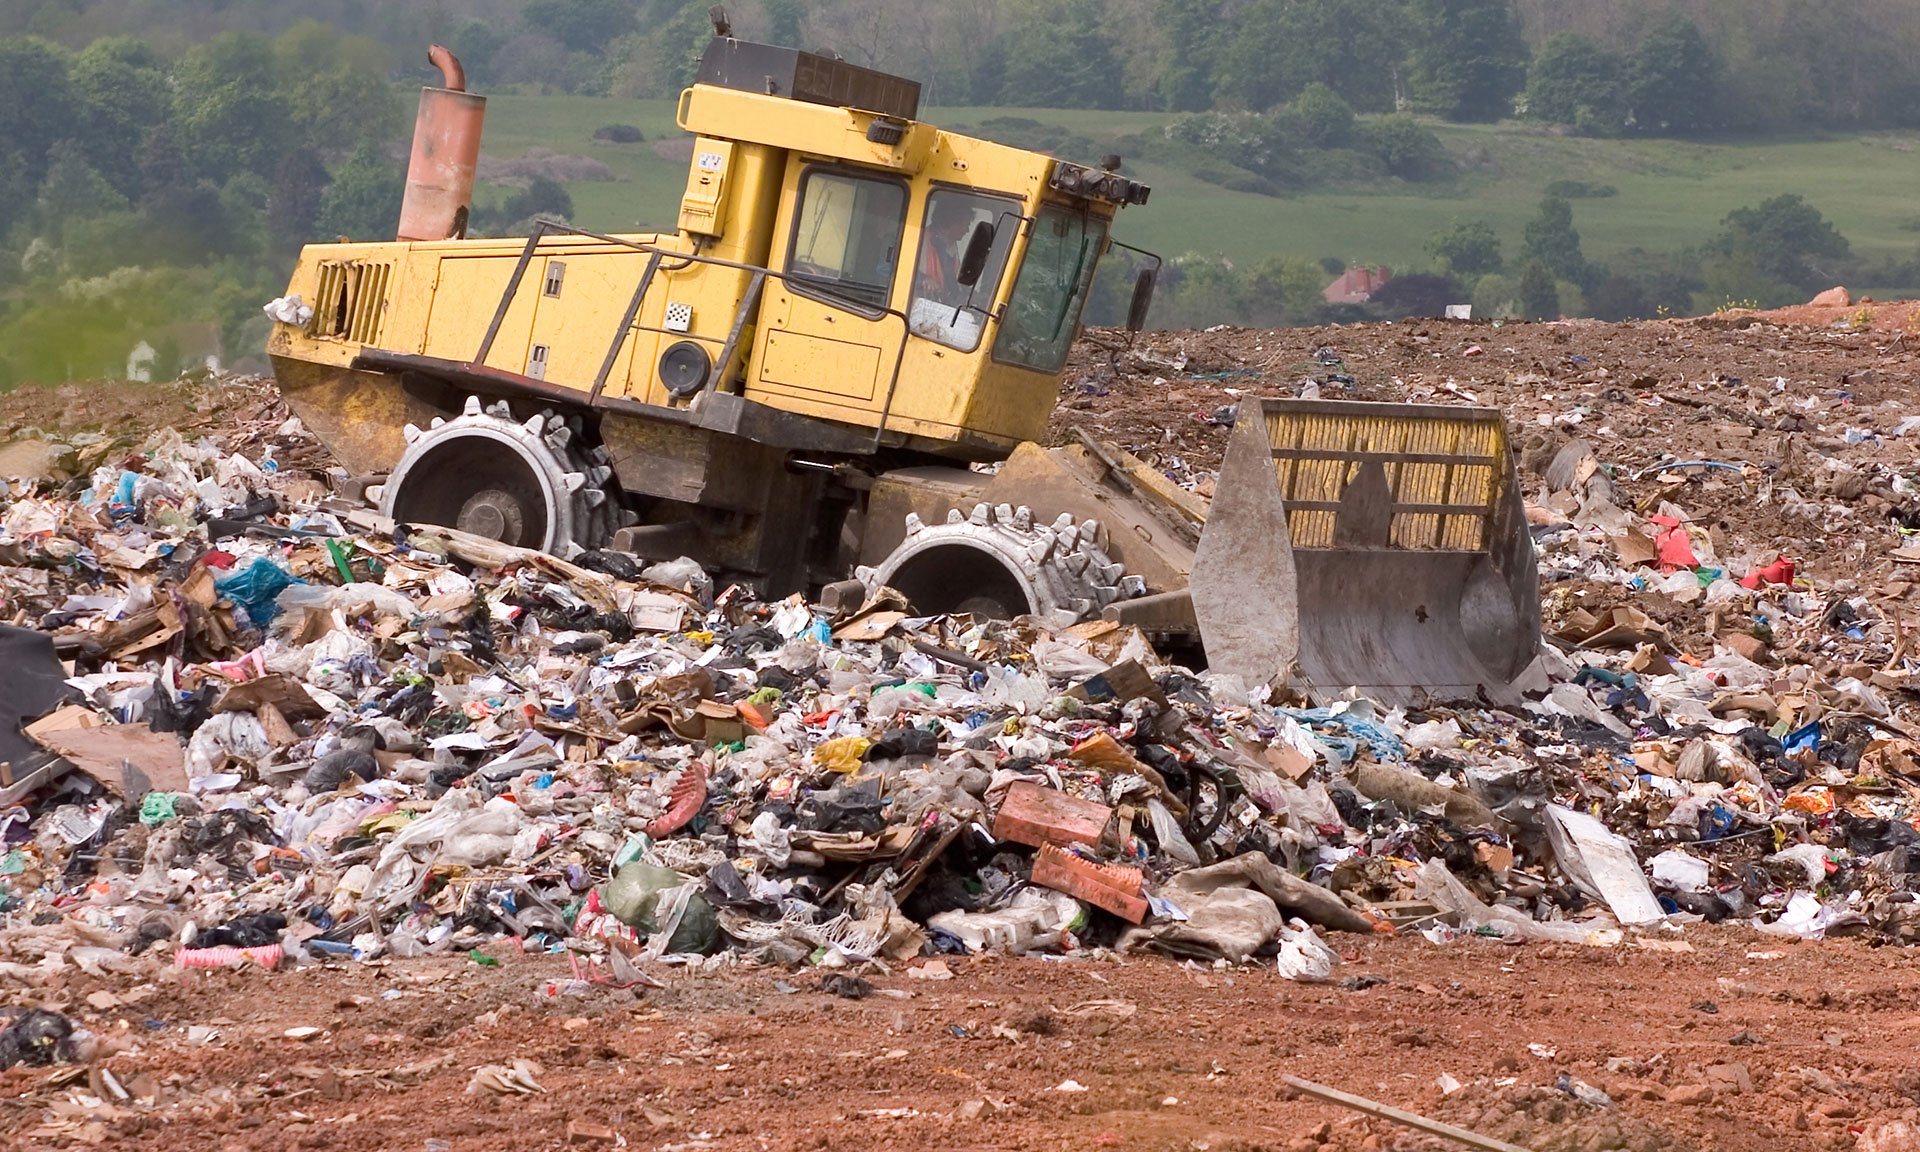 More information about "Υπόσχεση για μείωση των αποβλήτων από 23 πόλεις και περιφέρειες σε όλον τον κόσμο"